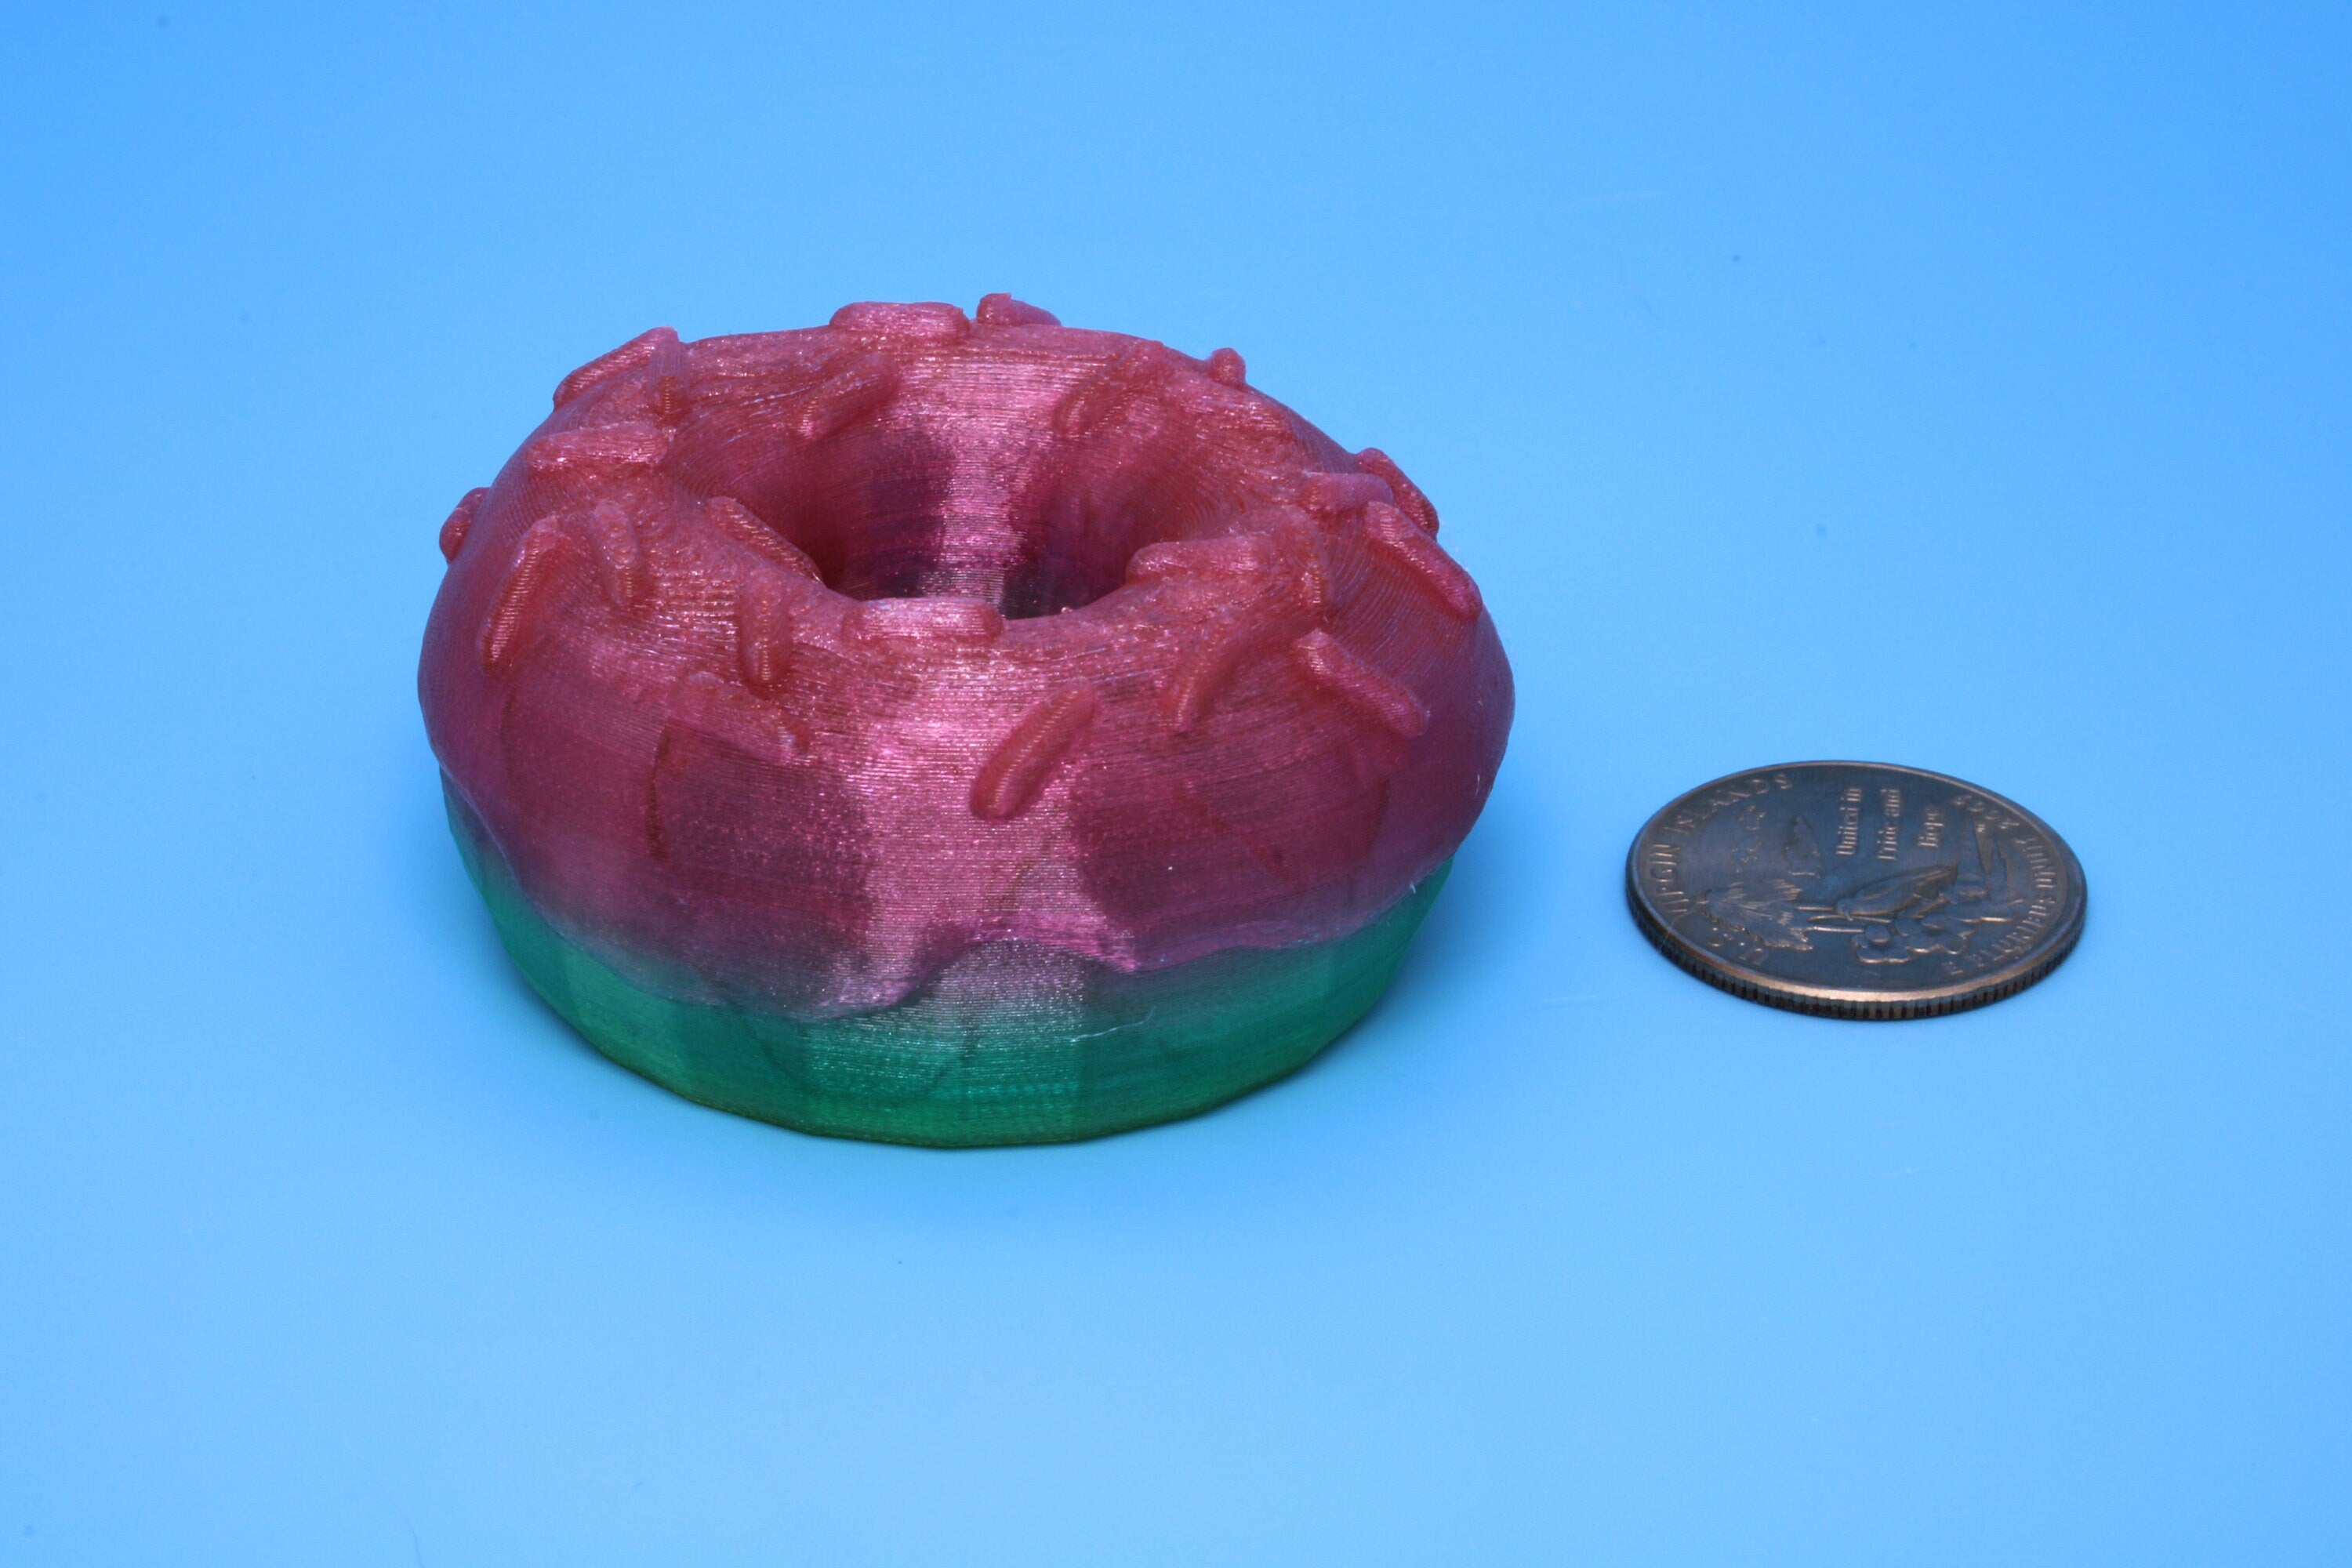 Doughnut Keychain | 3D Printed TPU | Squeezable.